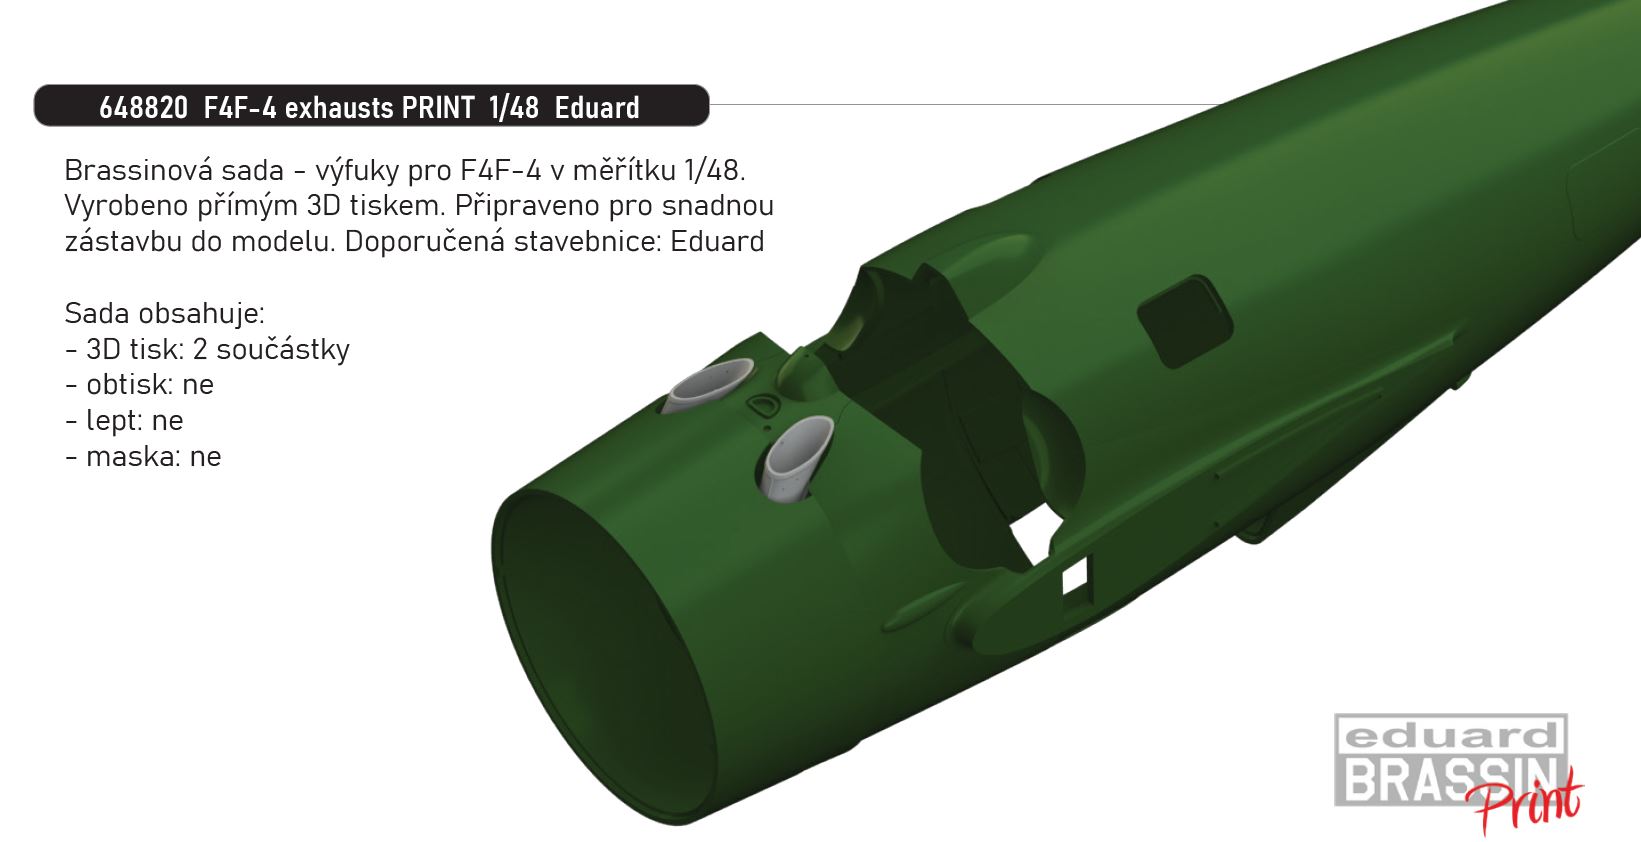 1/48 F4F-4 exhausts PRINT (EDUARD)